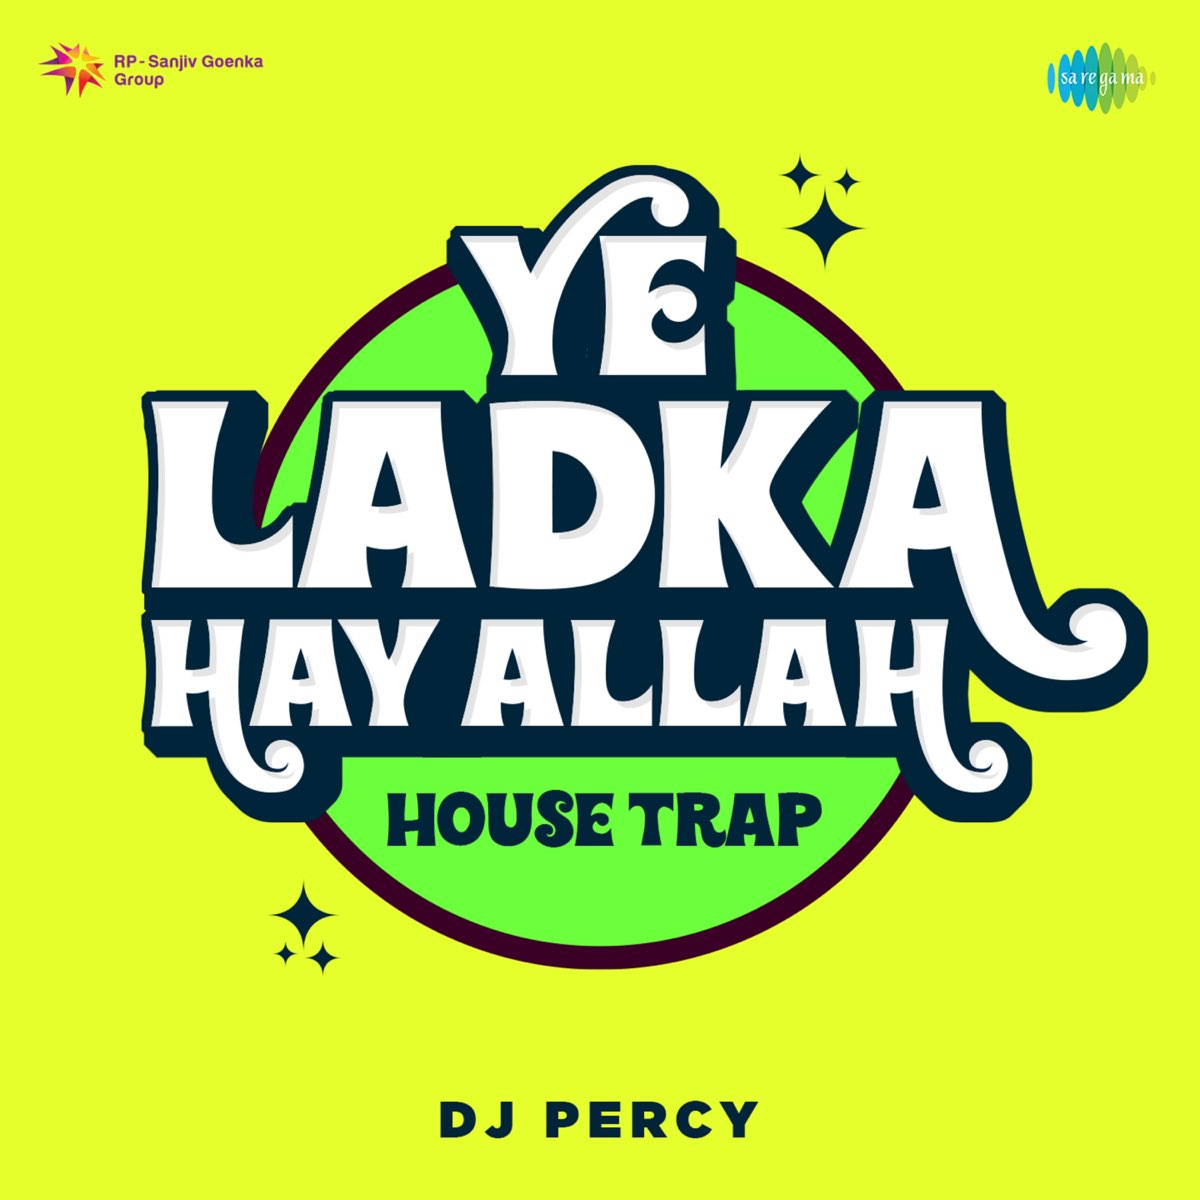 Ye Ladka Hay Allah (House Trap) - Single - Album by Asha Bhosle, R.D.  Burman & Majrooh Sultanpuri - Apple Music